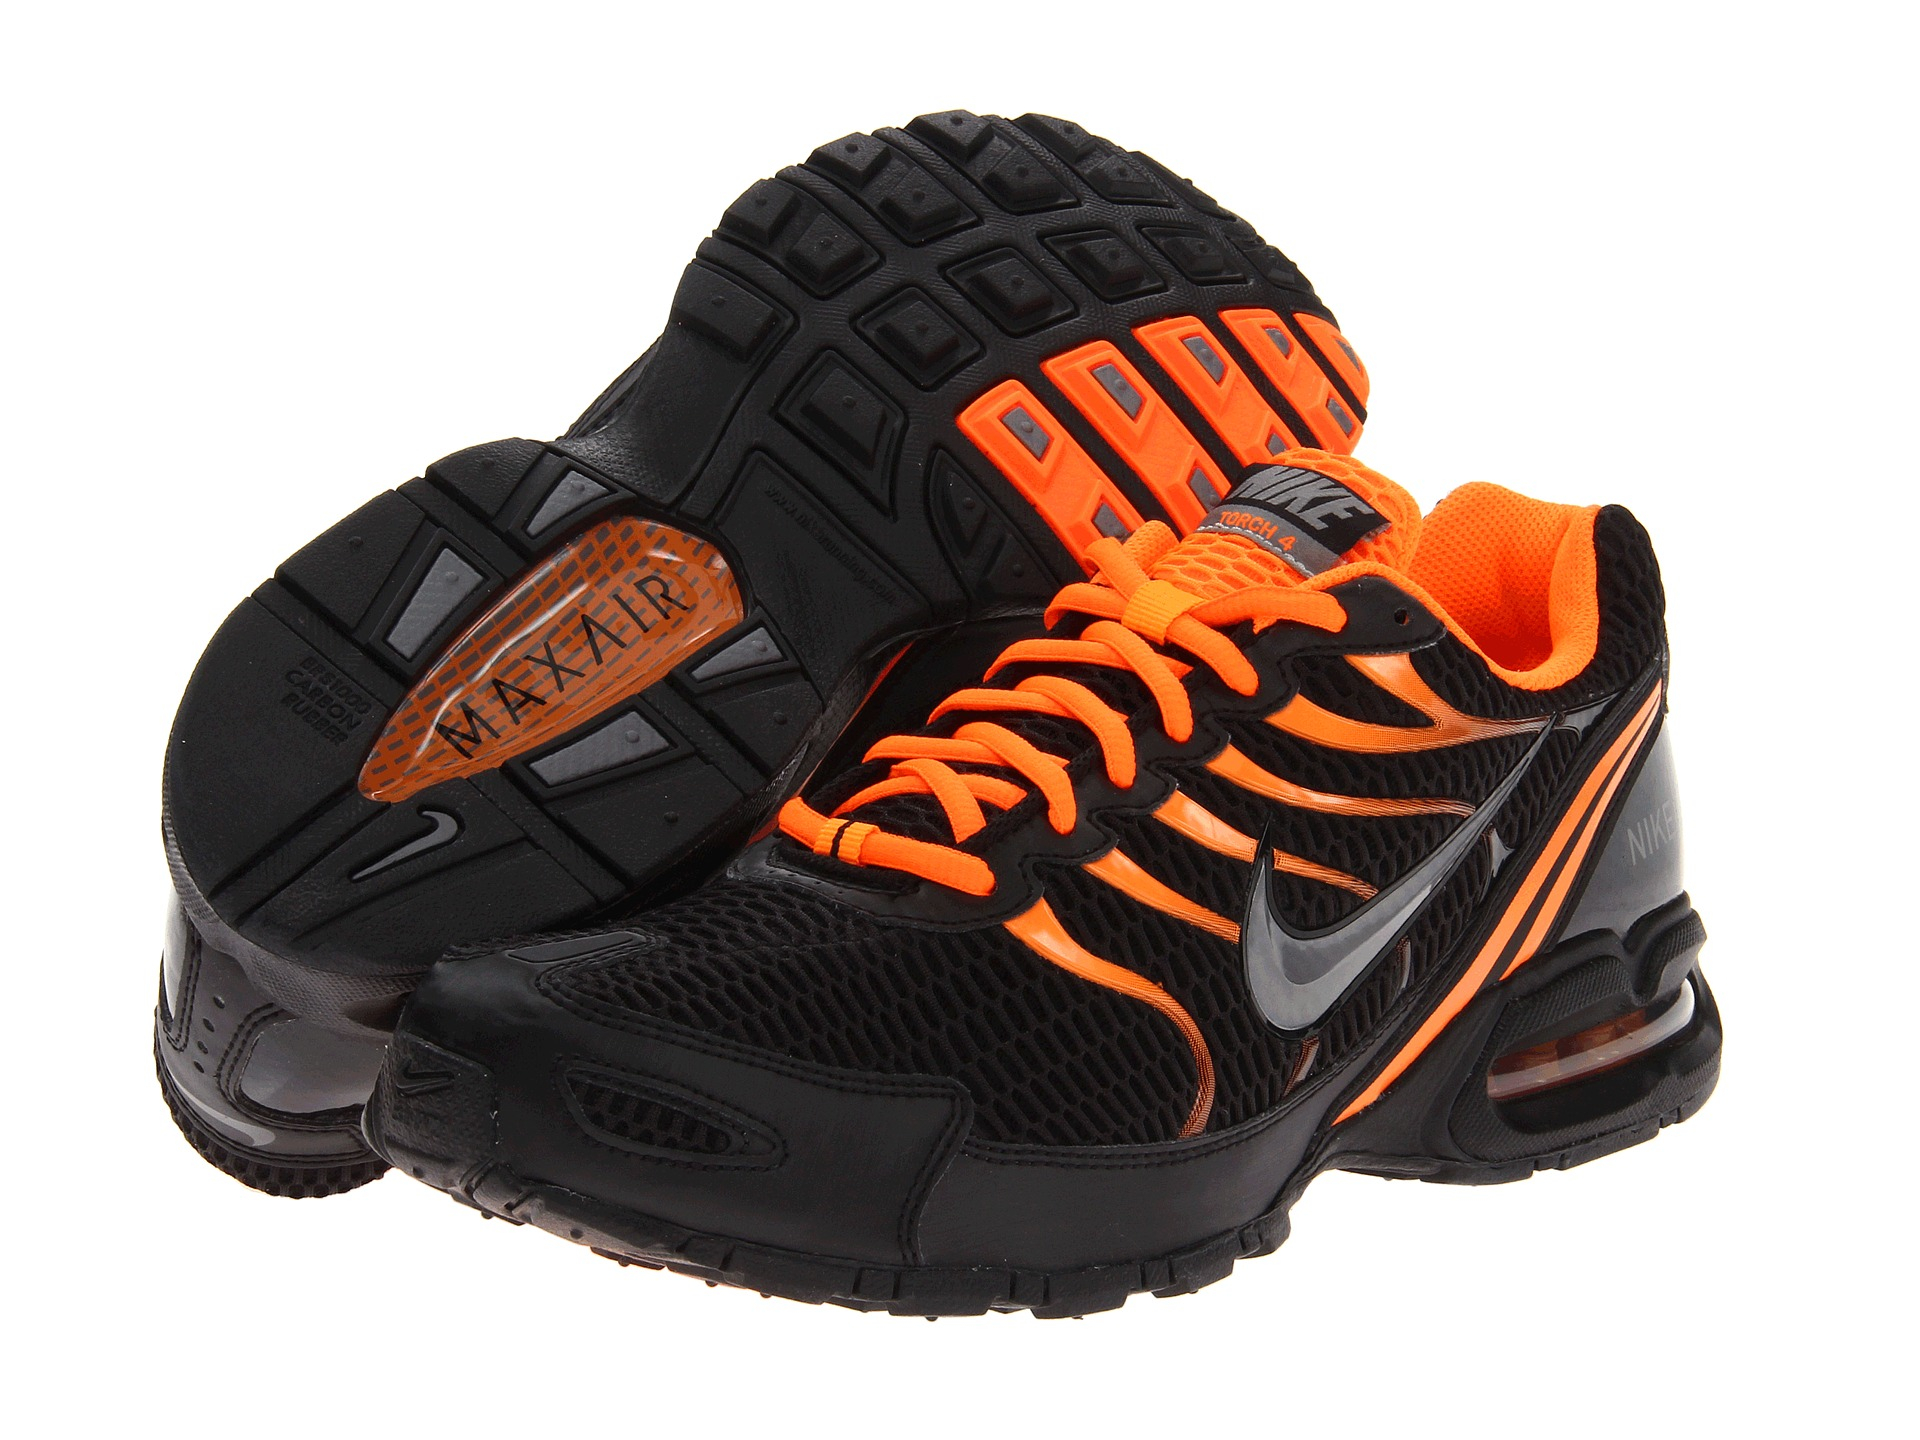 Nike Air Max Torch 4 in Black (Orange) for Men - Lyst